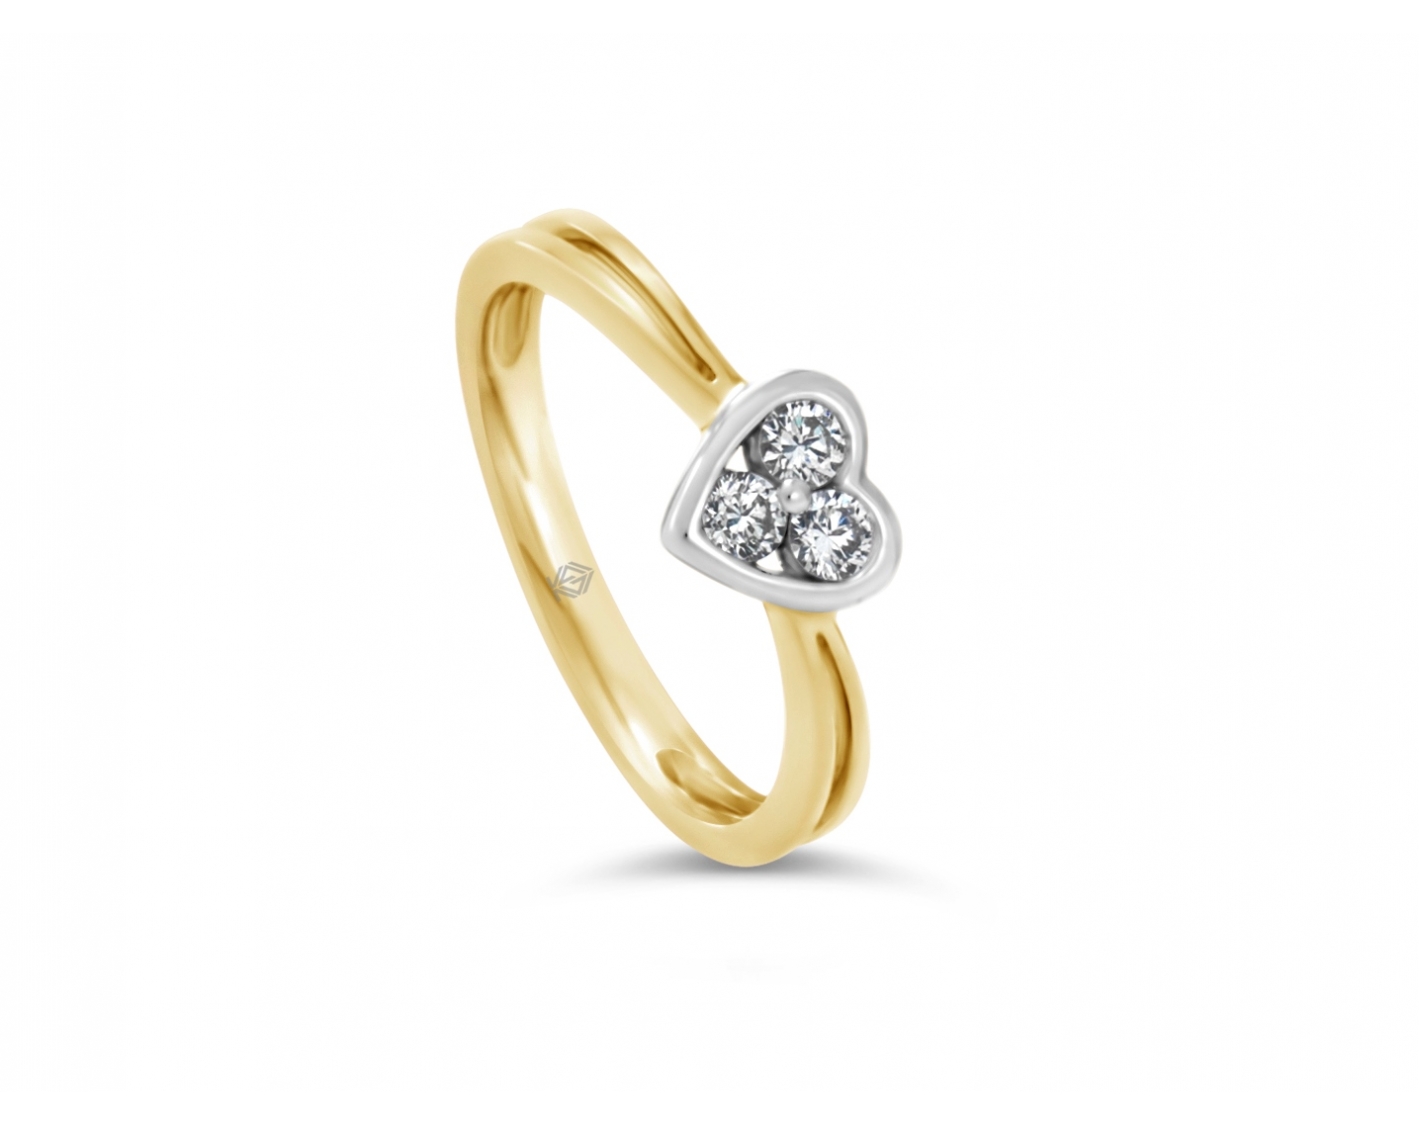 18k white gold bicolor heart shaped illusion set engagement ring in bezel set Photos & images